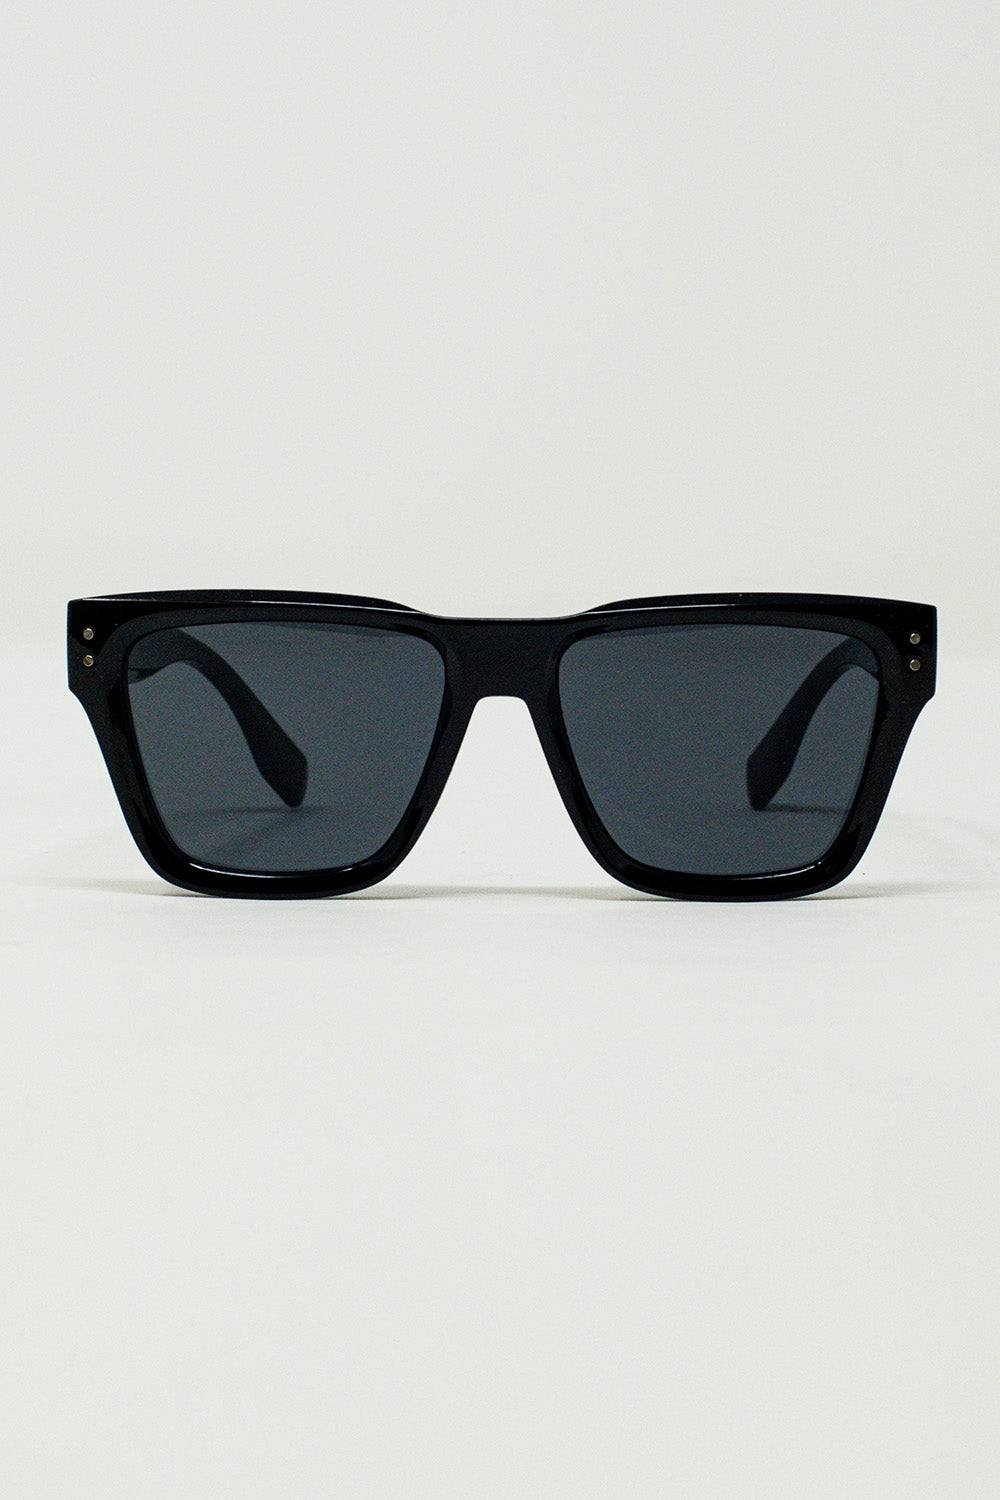 Q2 Square Chunky Black Sunglasses